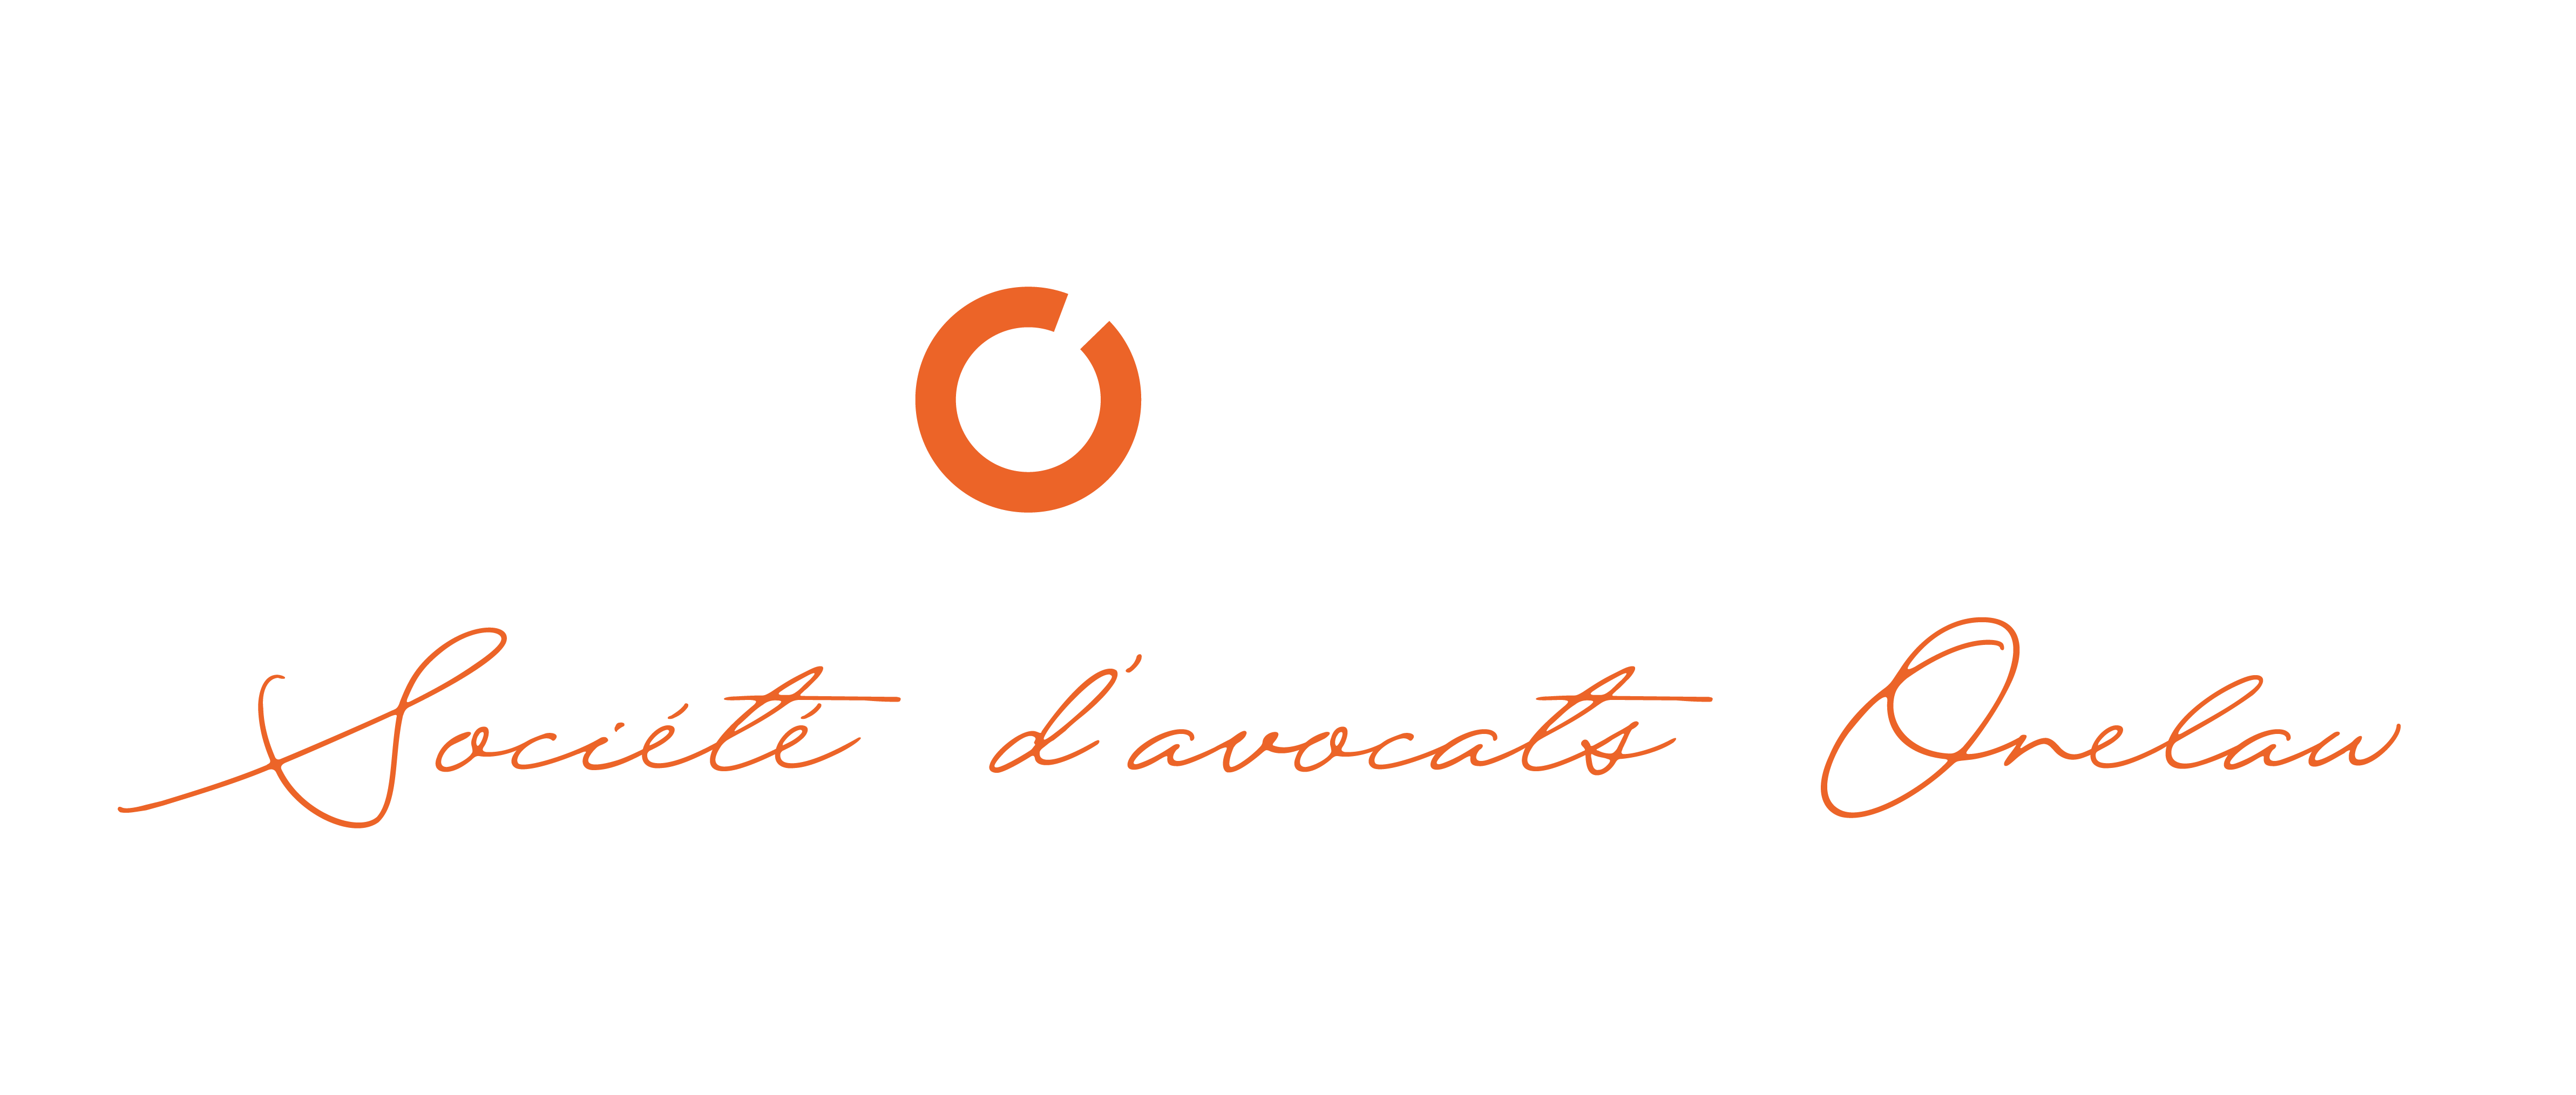 leyton-legal-avocats-lyon-logo